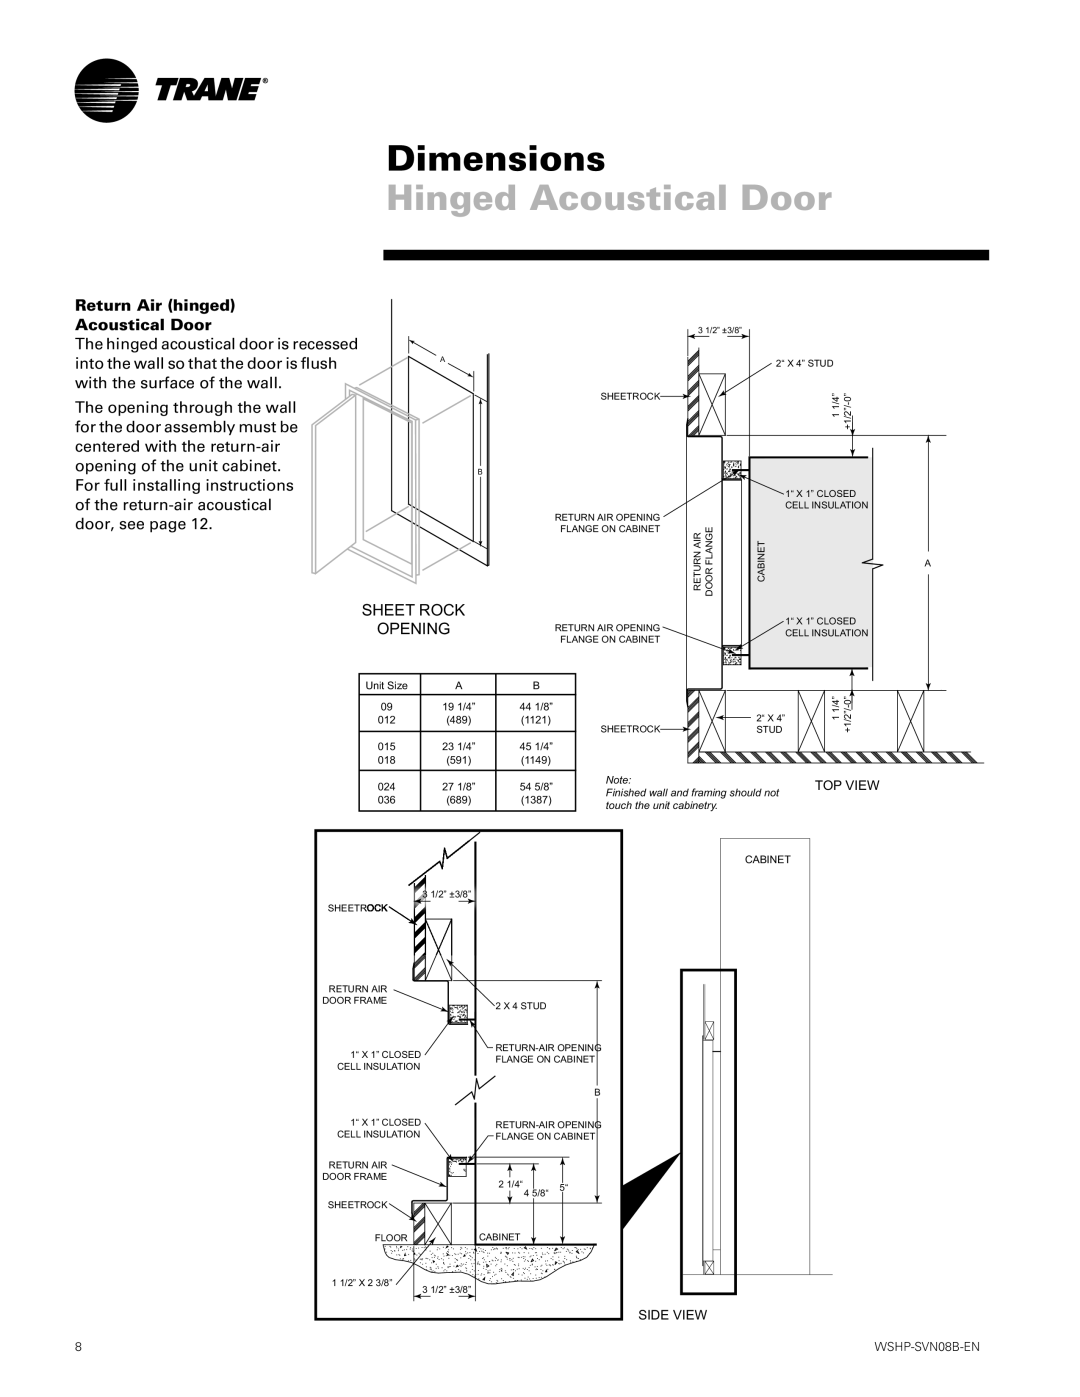 Trane GETB manual Hinged Acoustical Door, Dimensions, Return Air hinged Acoustical Door 